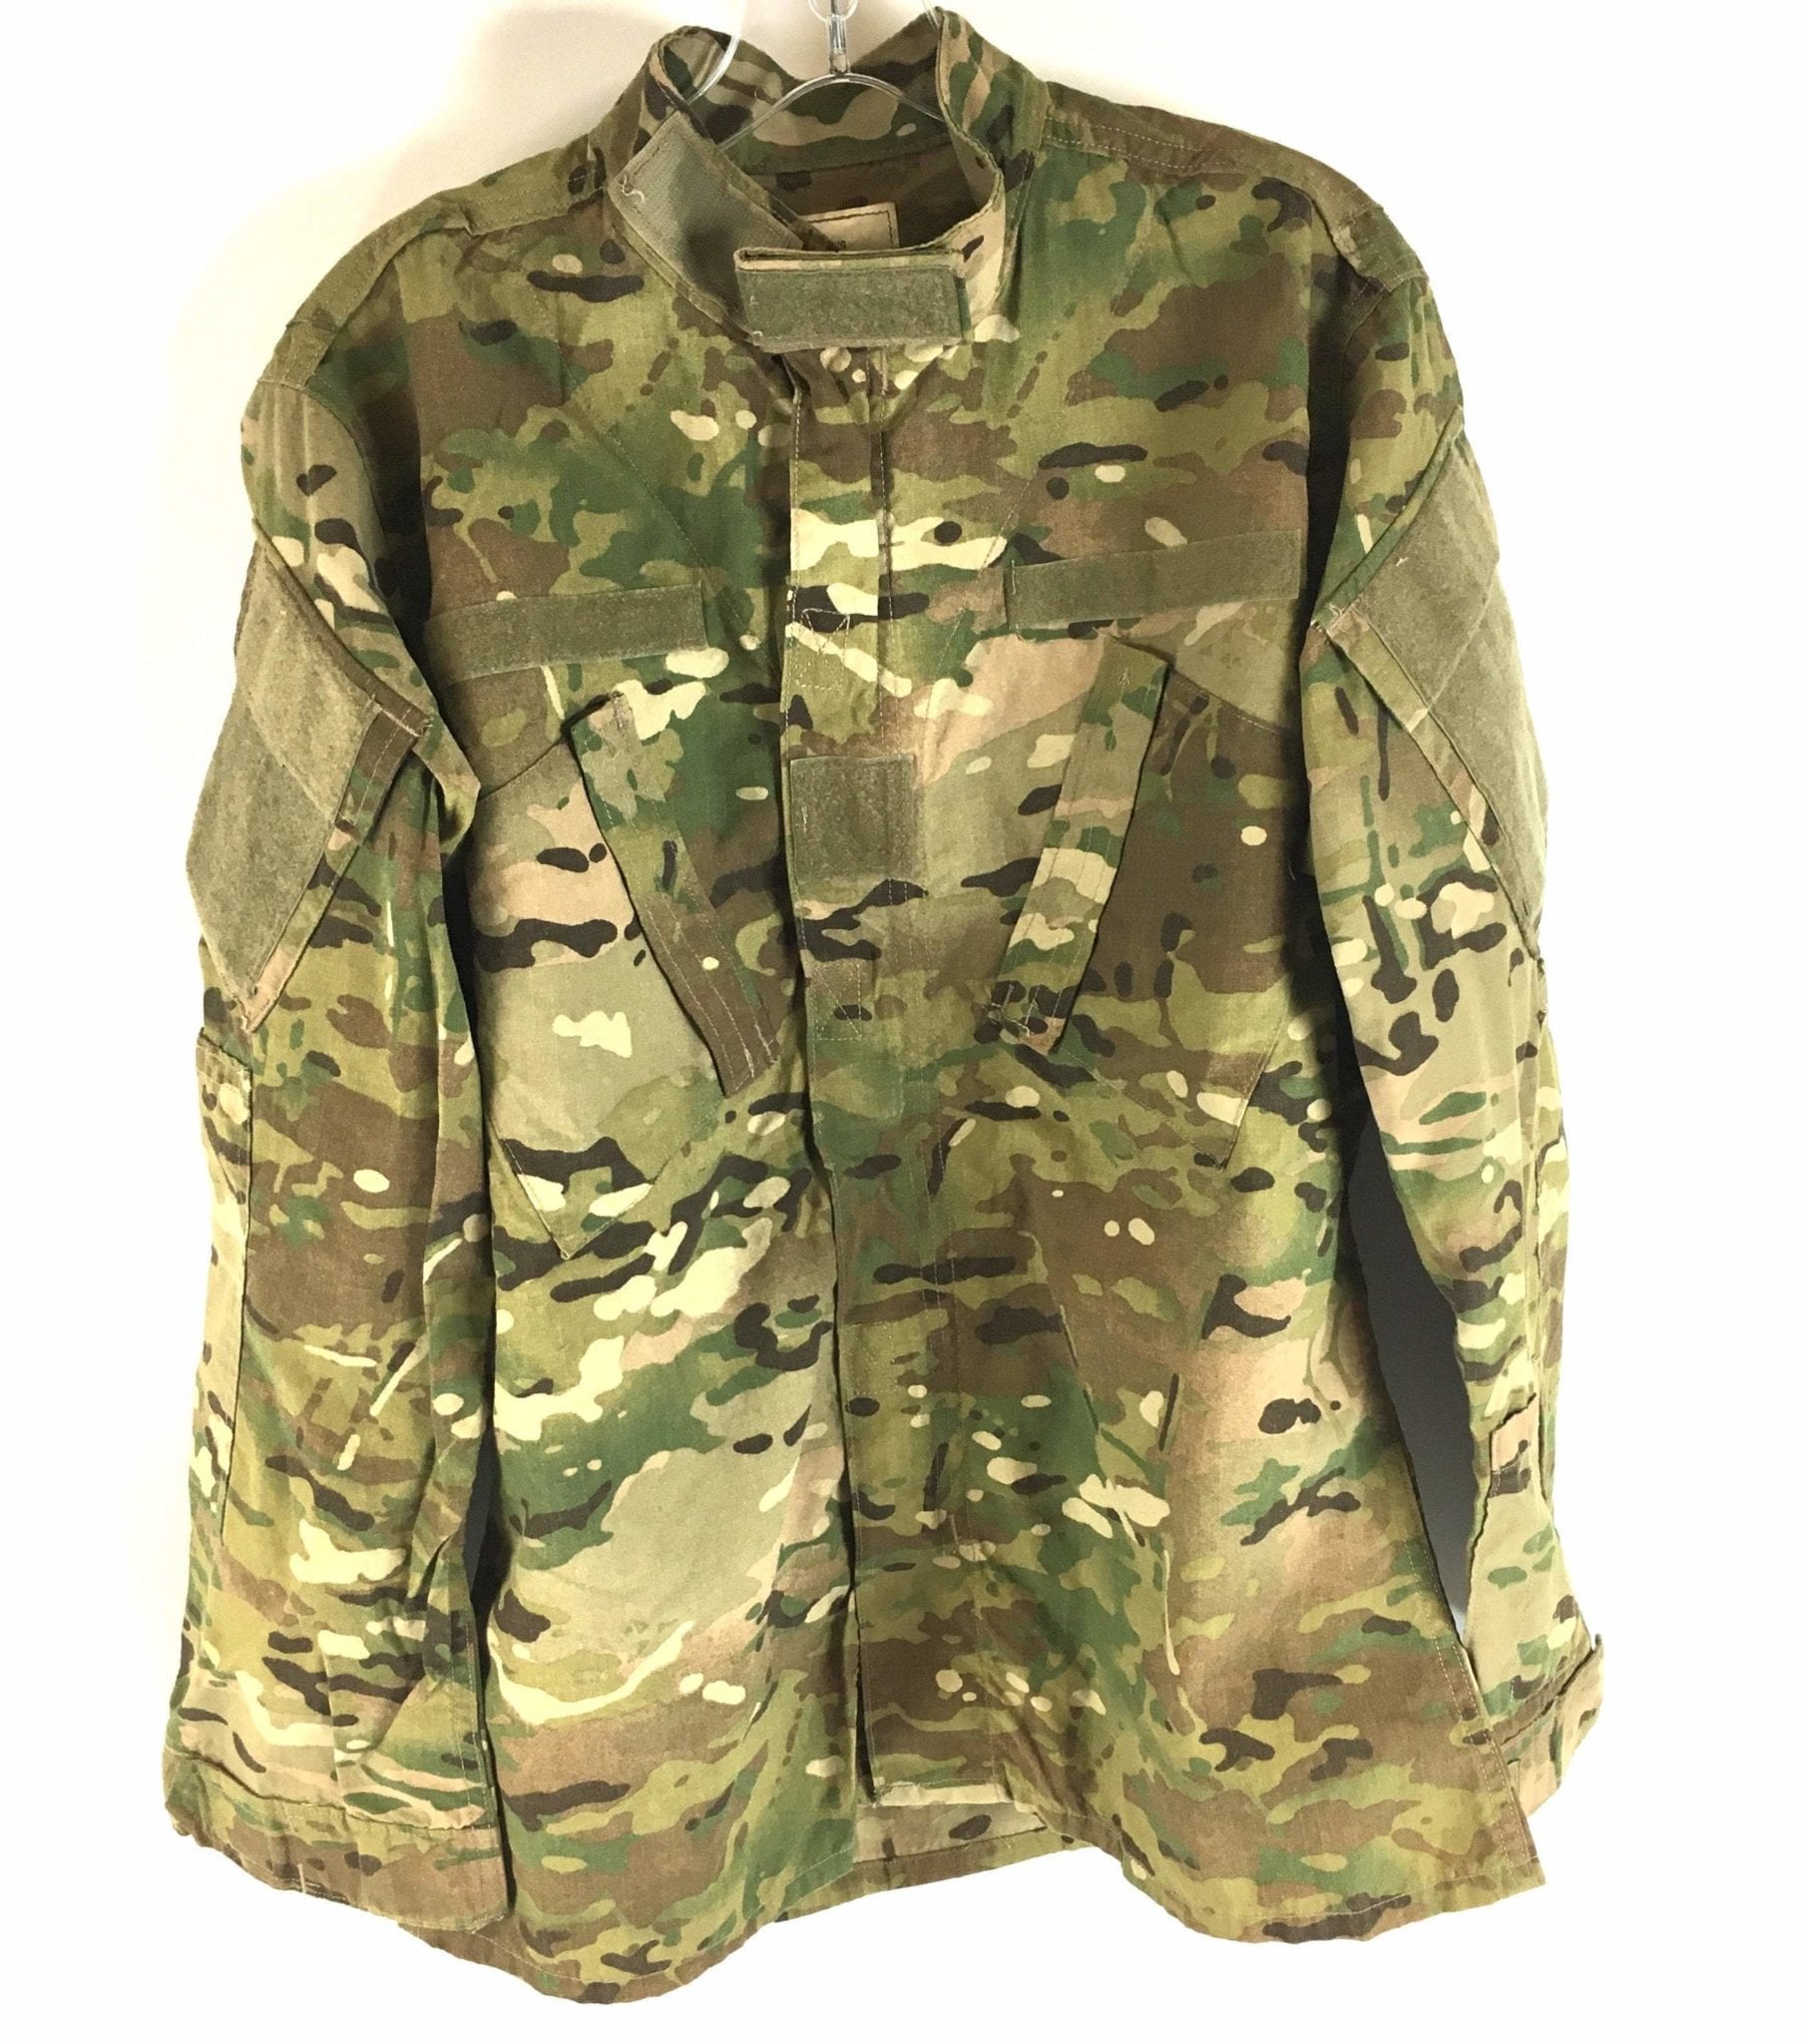 Ocp Jacket Army - Army Military